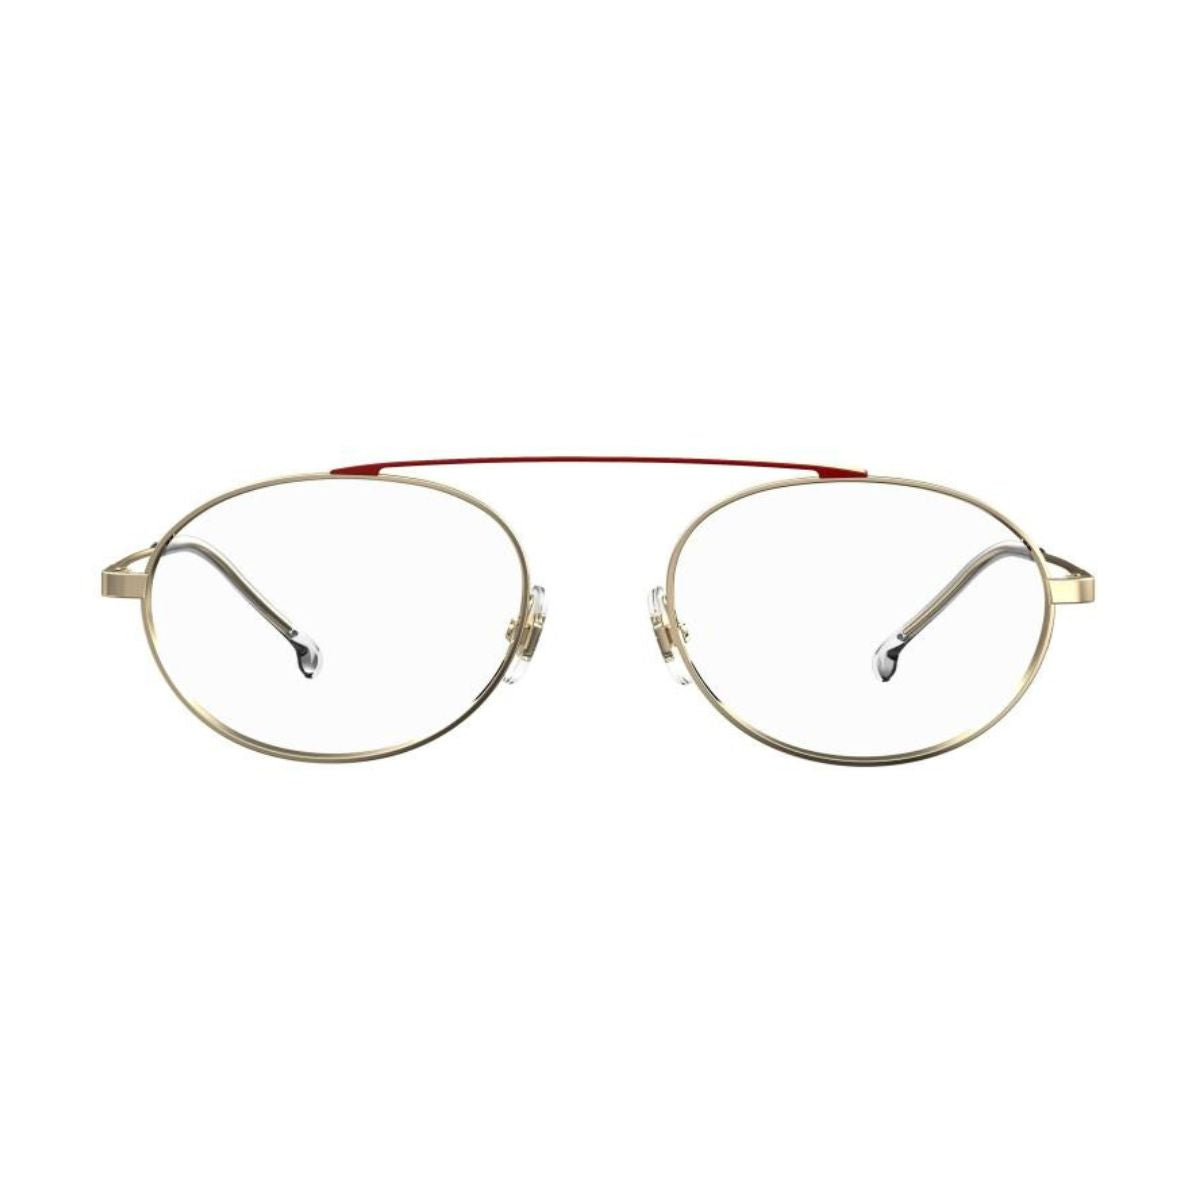 "buy Carrera 2011T 010 round shape eyeglasses frame for men and women at optorium"